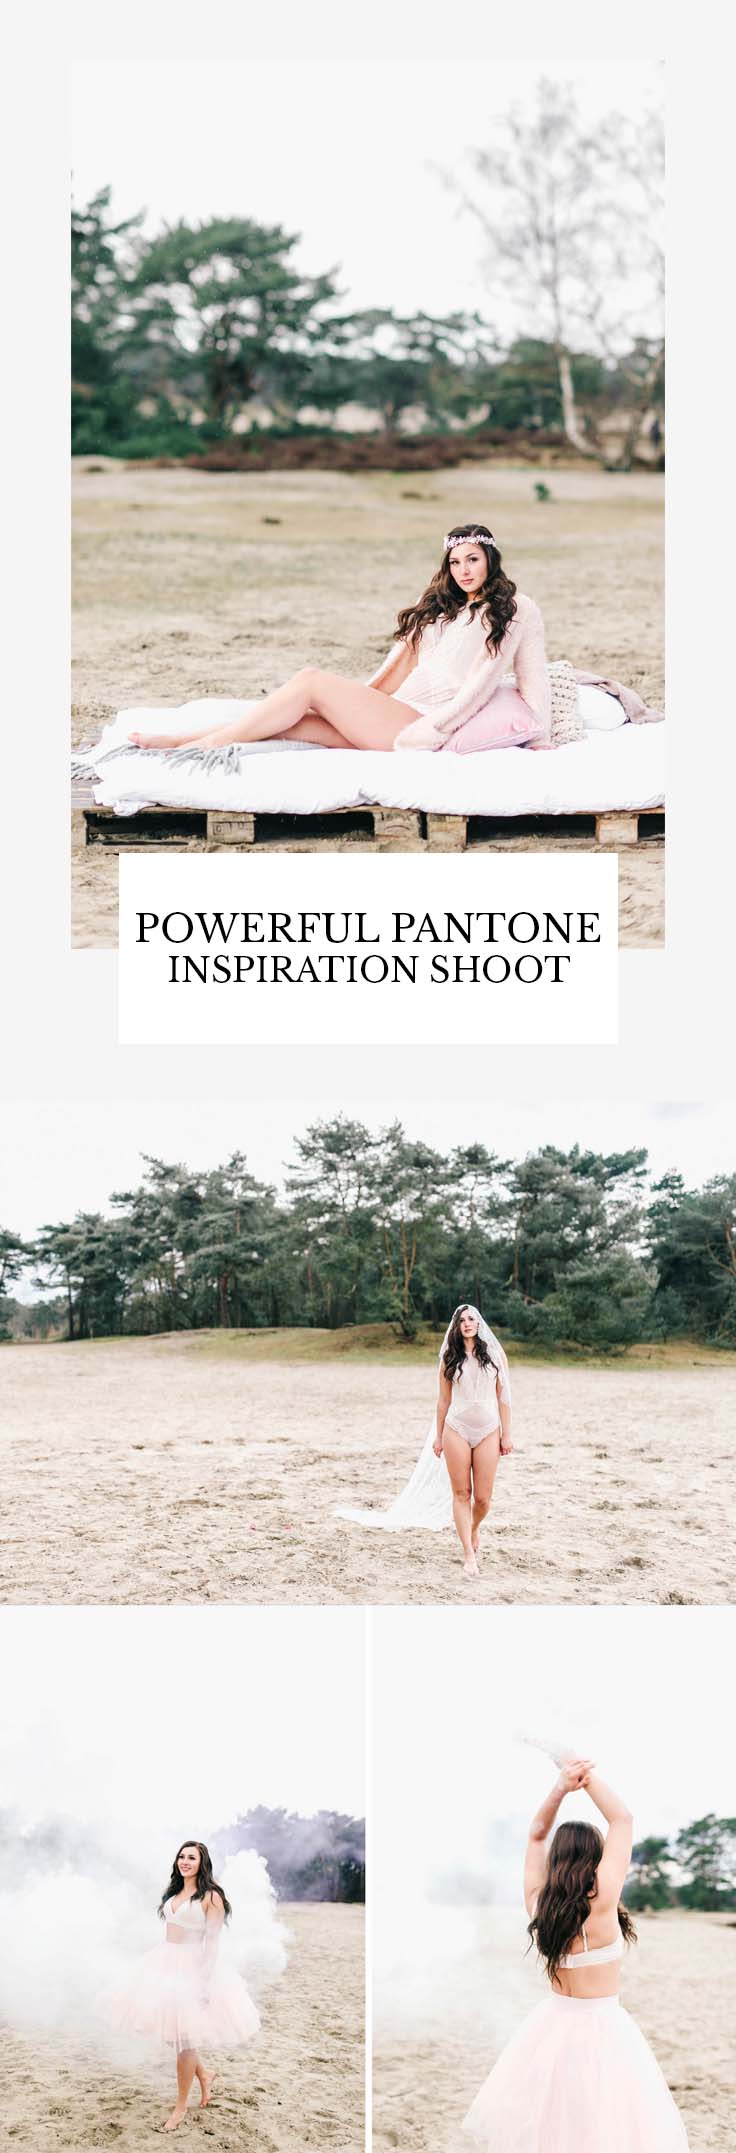 Powerful Pantone Inspirational Shoot